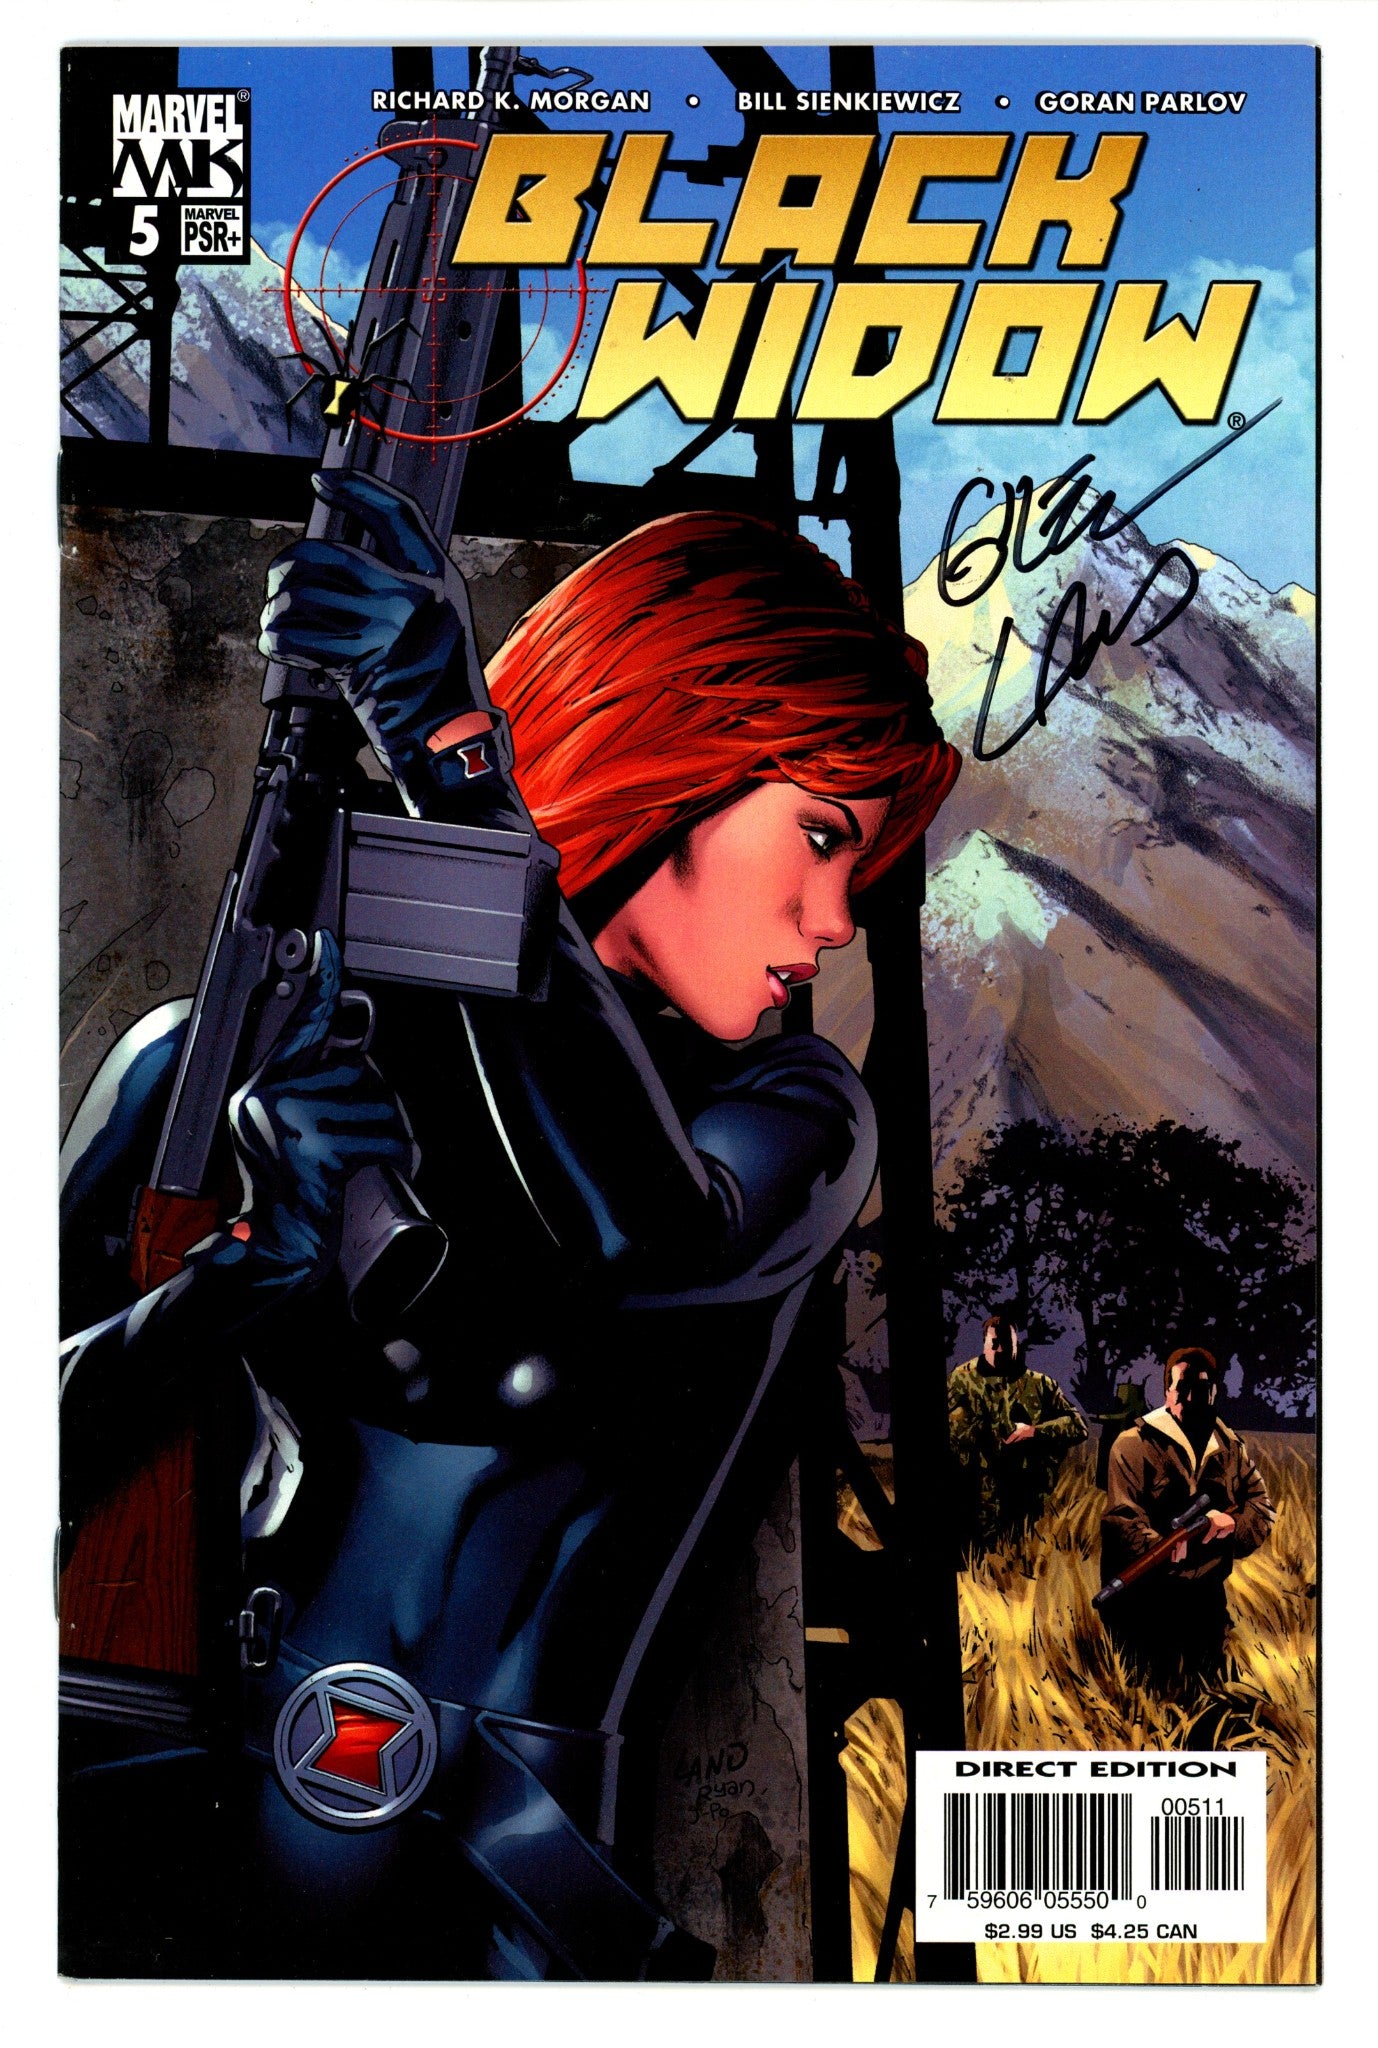 Black Widow Vol 3 5 High Grade (2005) Signed x1 Cover Greg Land 